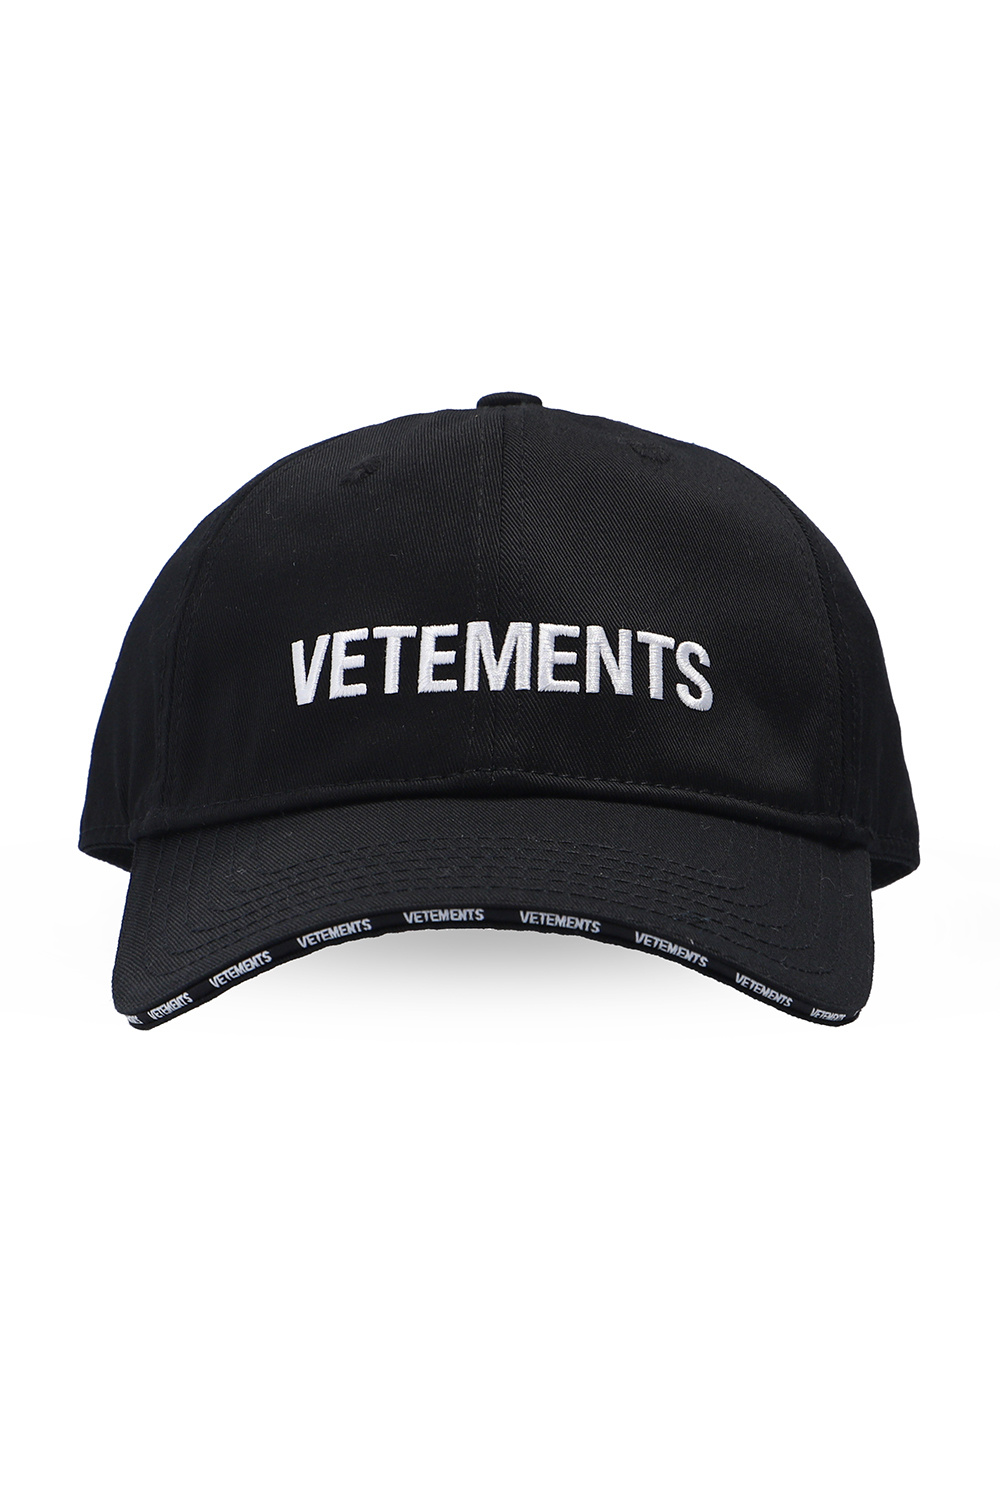 - cap Jacobs lighters men embroidered GB Black Marc hat VETEMENTS IetpShops - Knitwear s The Traveler